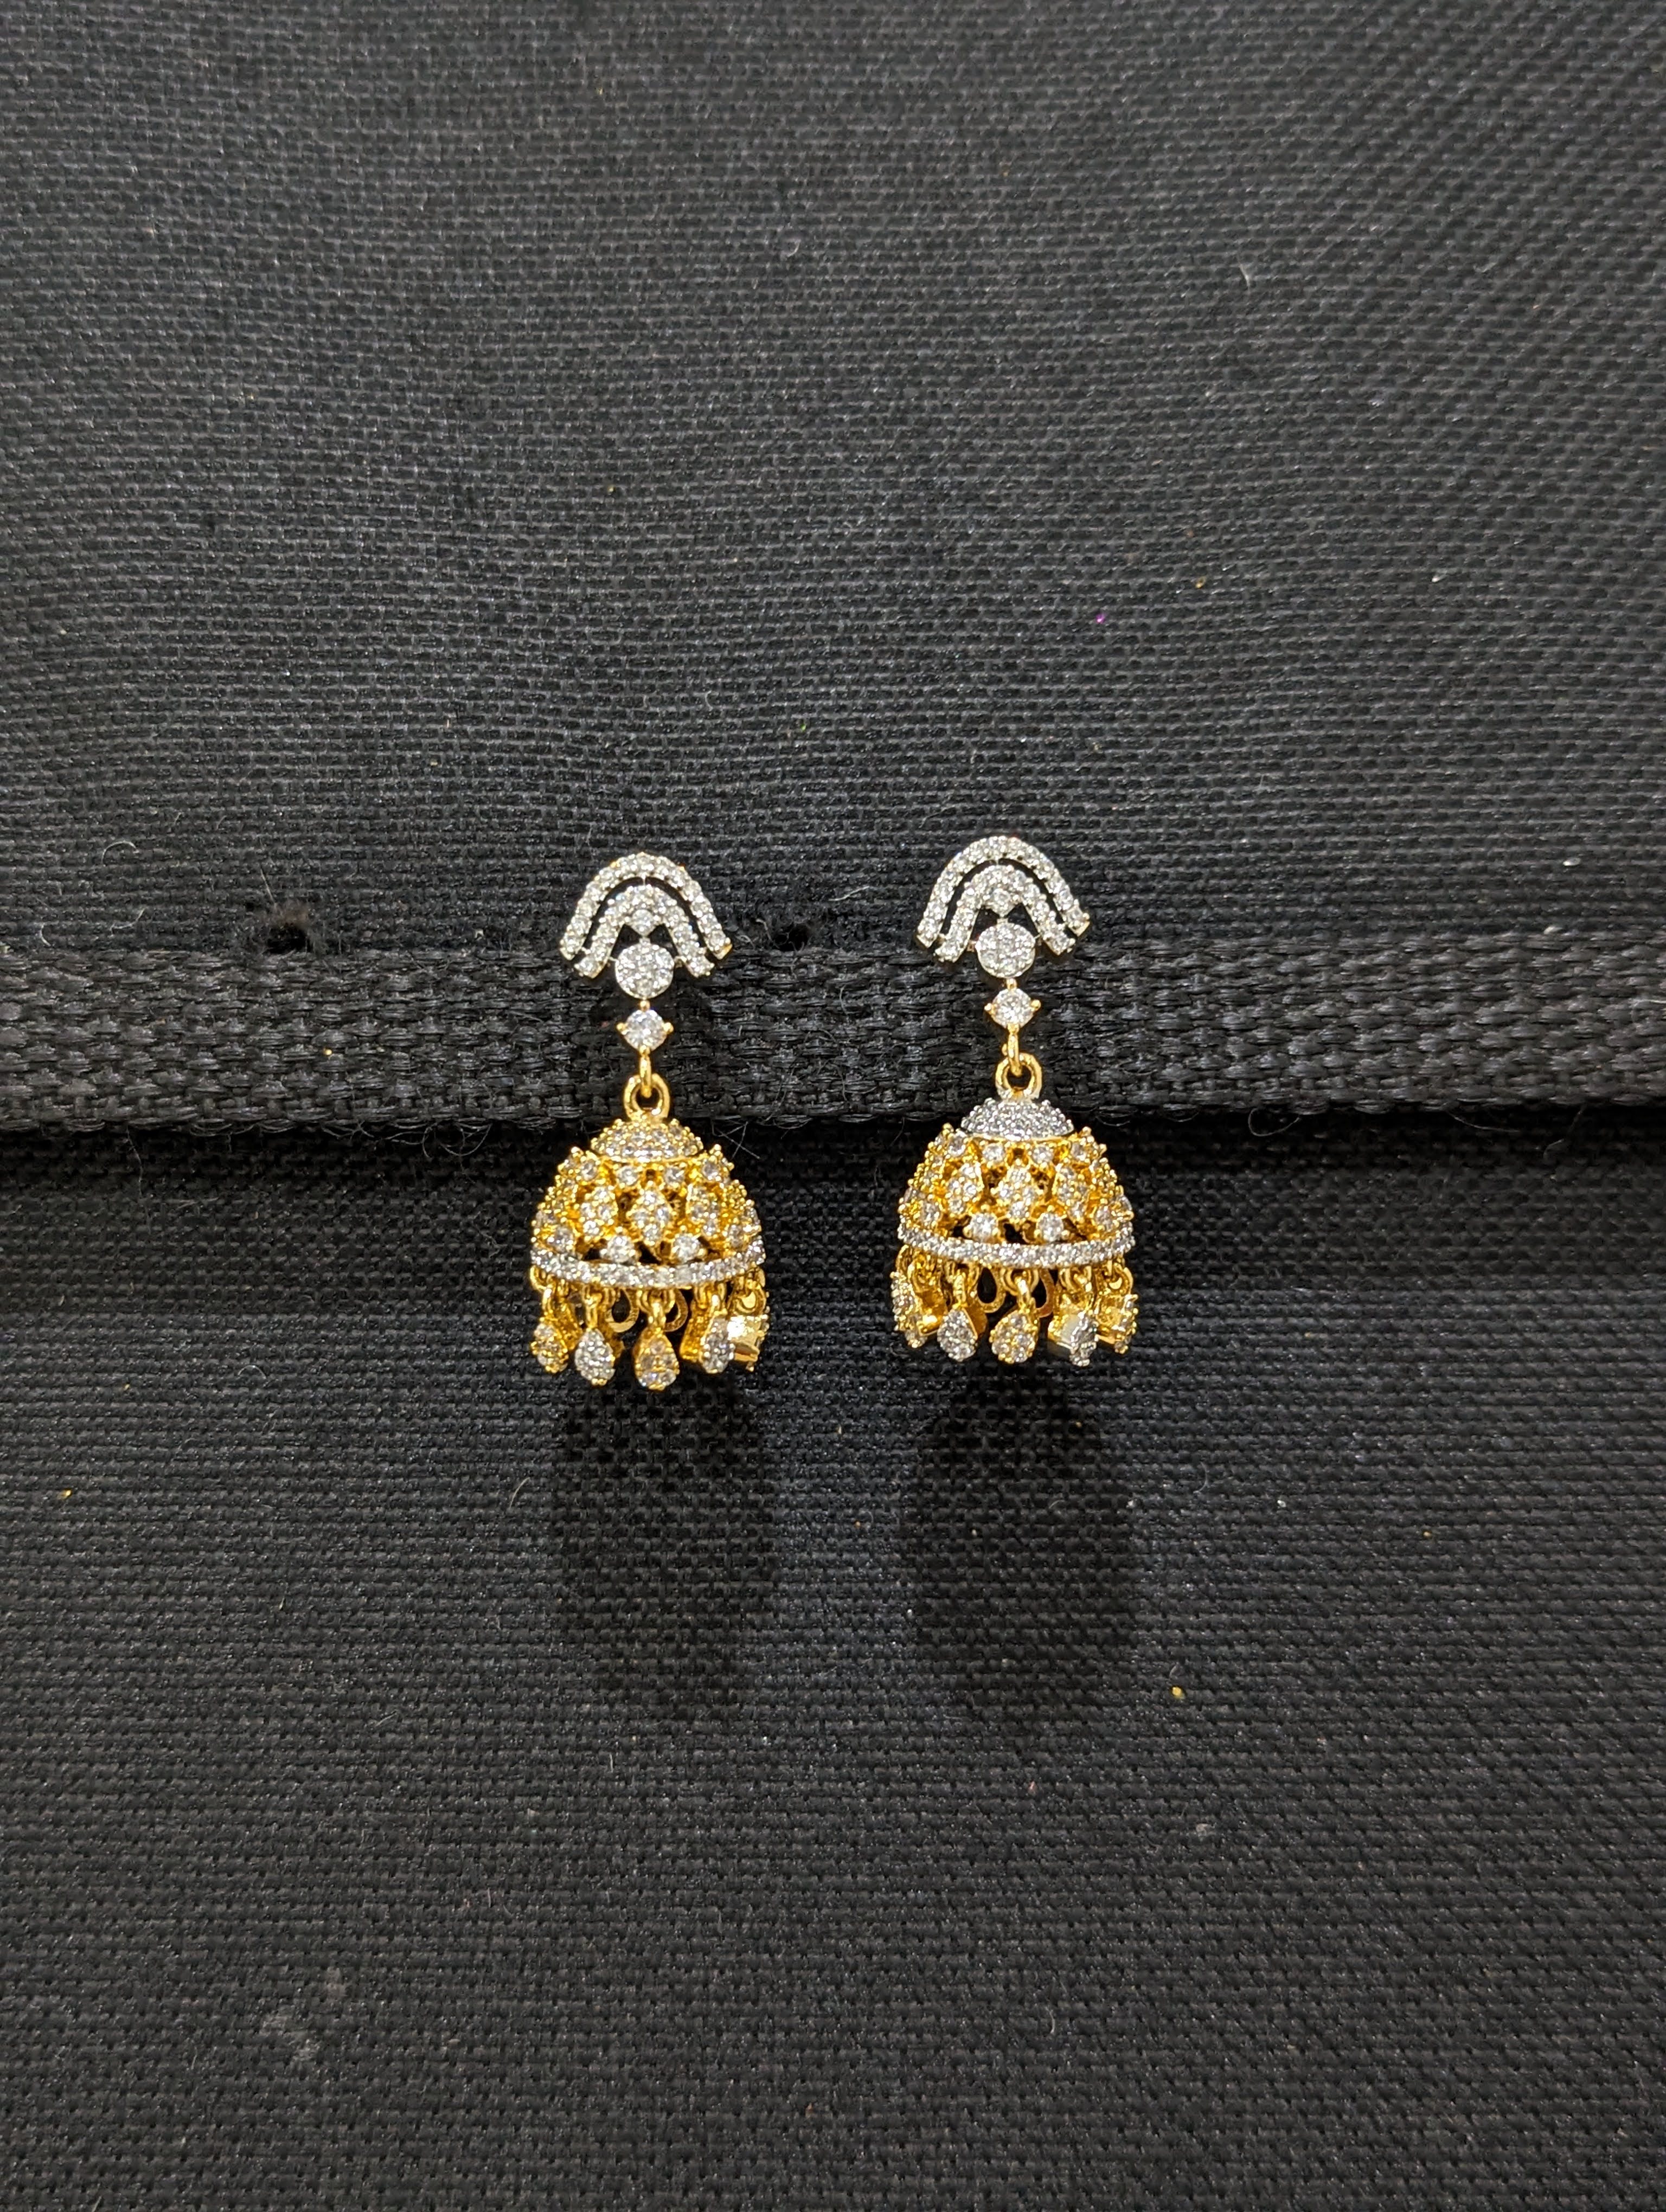 Share more than 212 jhumka earrings design super hot